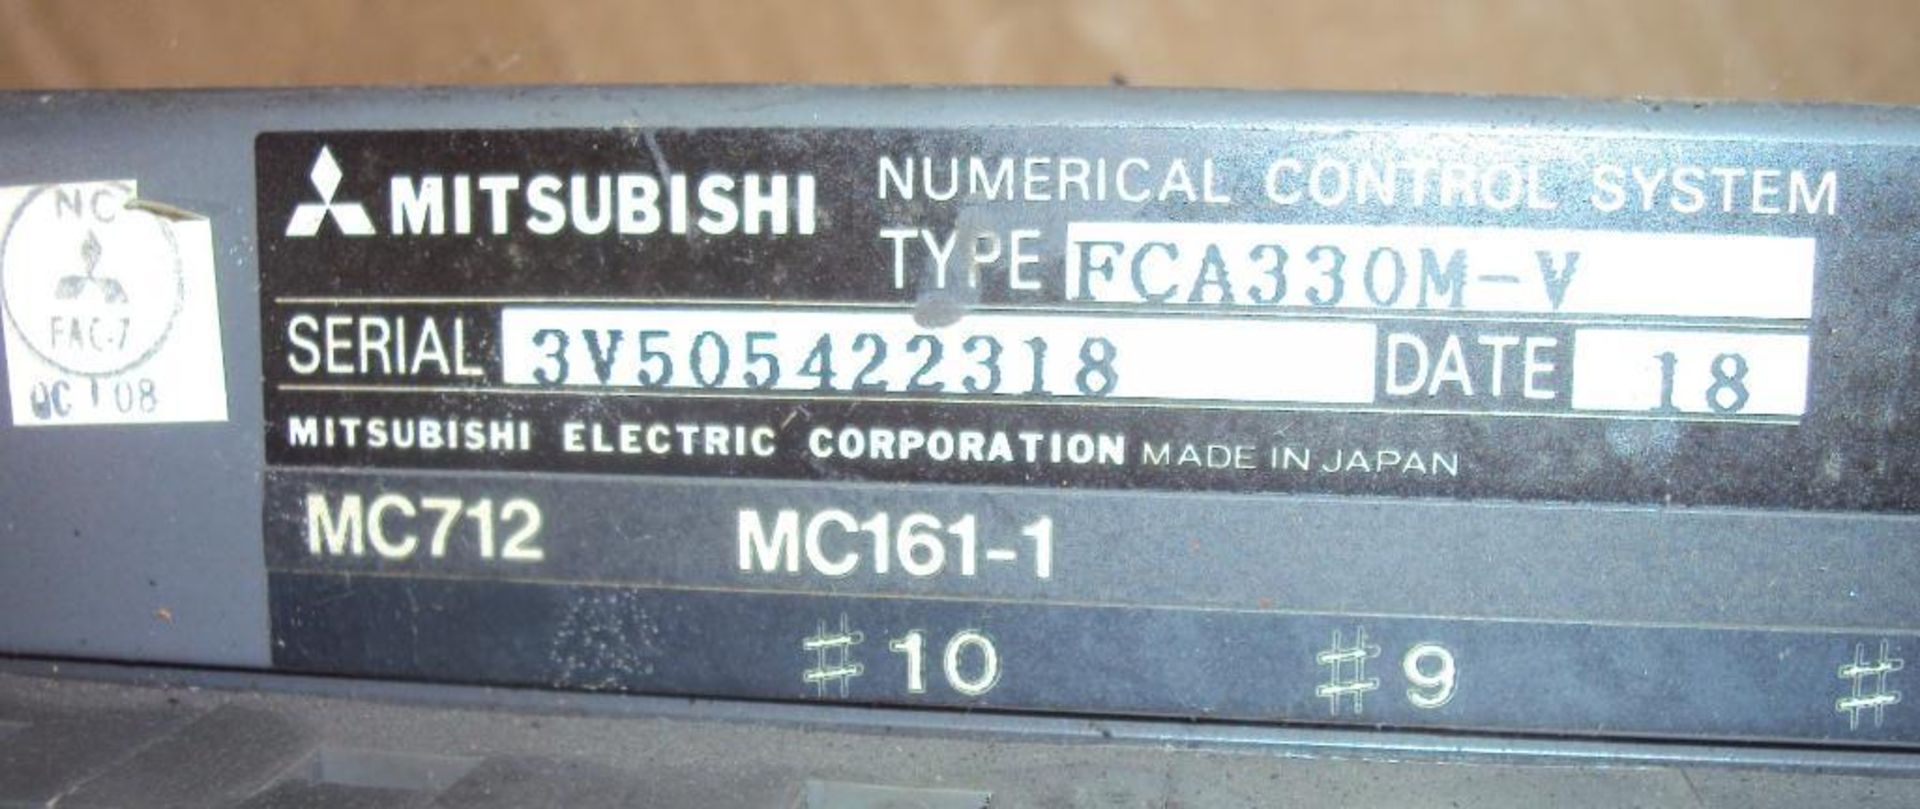 Mitsubishi Mazak CNC Numerical Control System FCA330M-V - Image 3 of 6